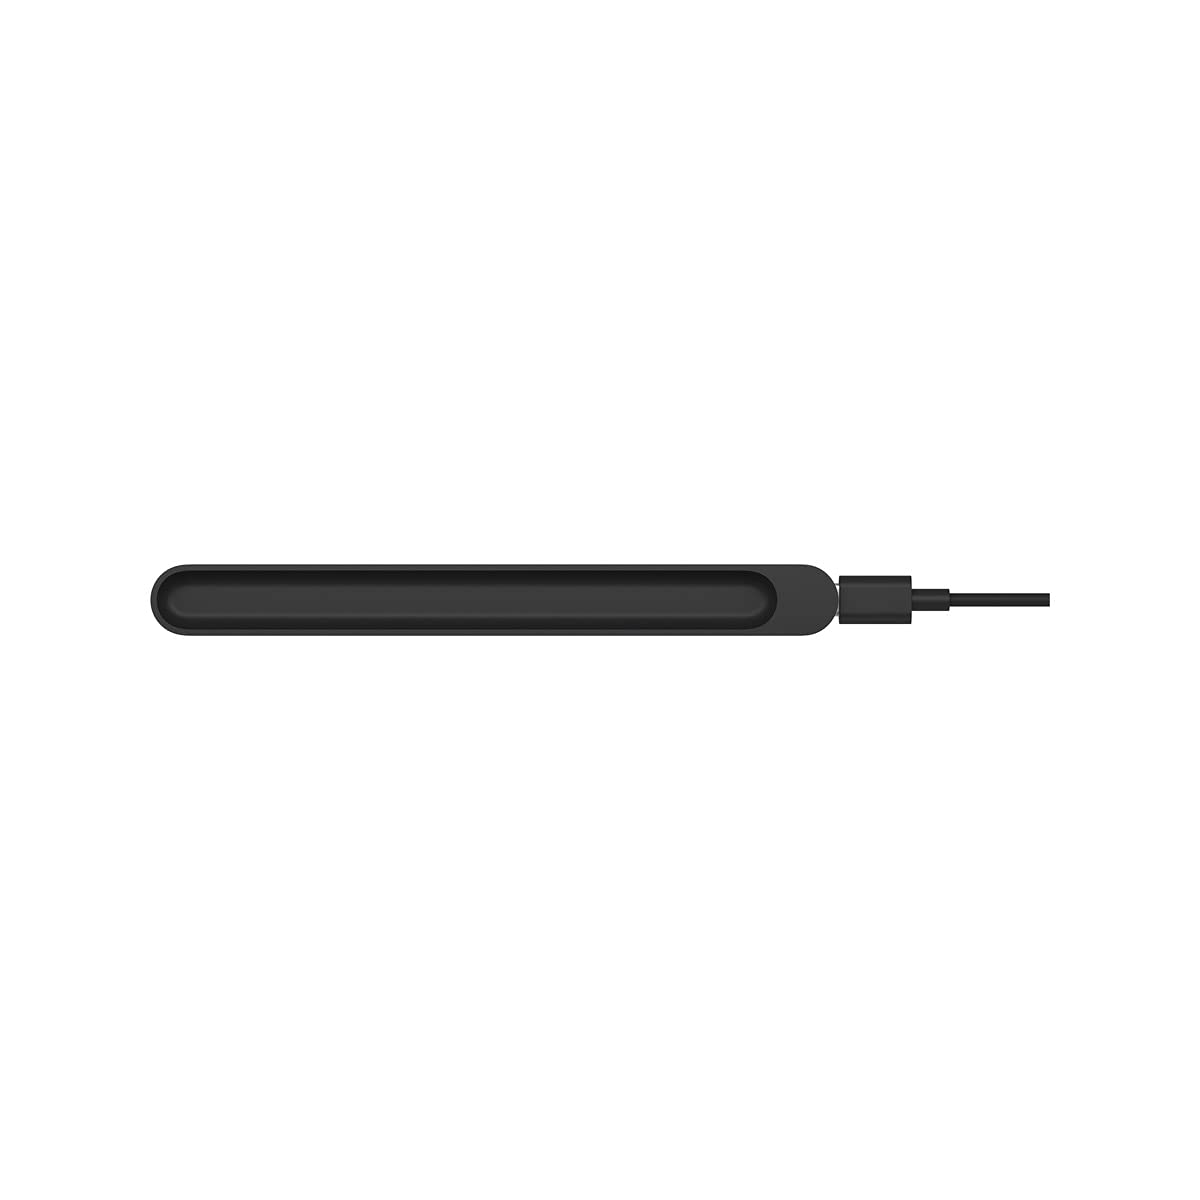 Microsoft Surface Slim Pen Charger - Matte Black (Open Box, Like New)